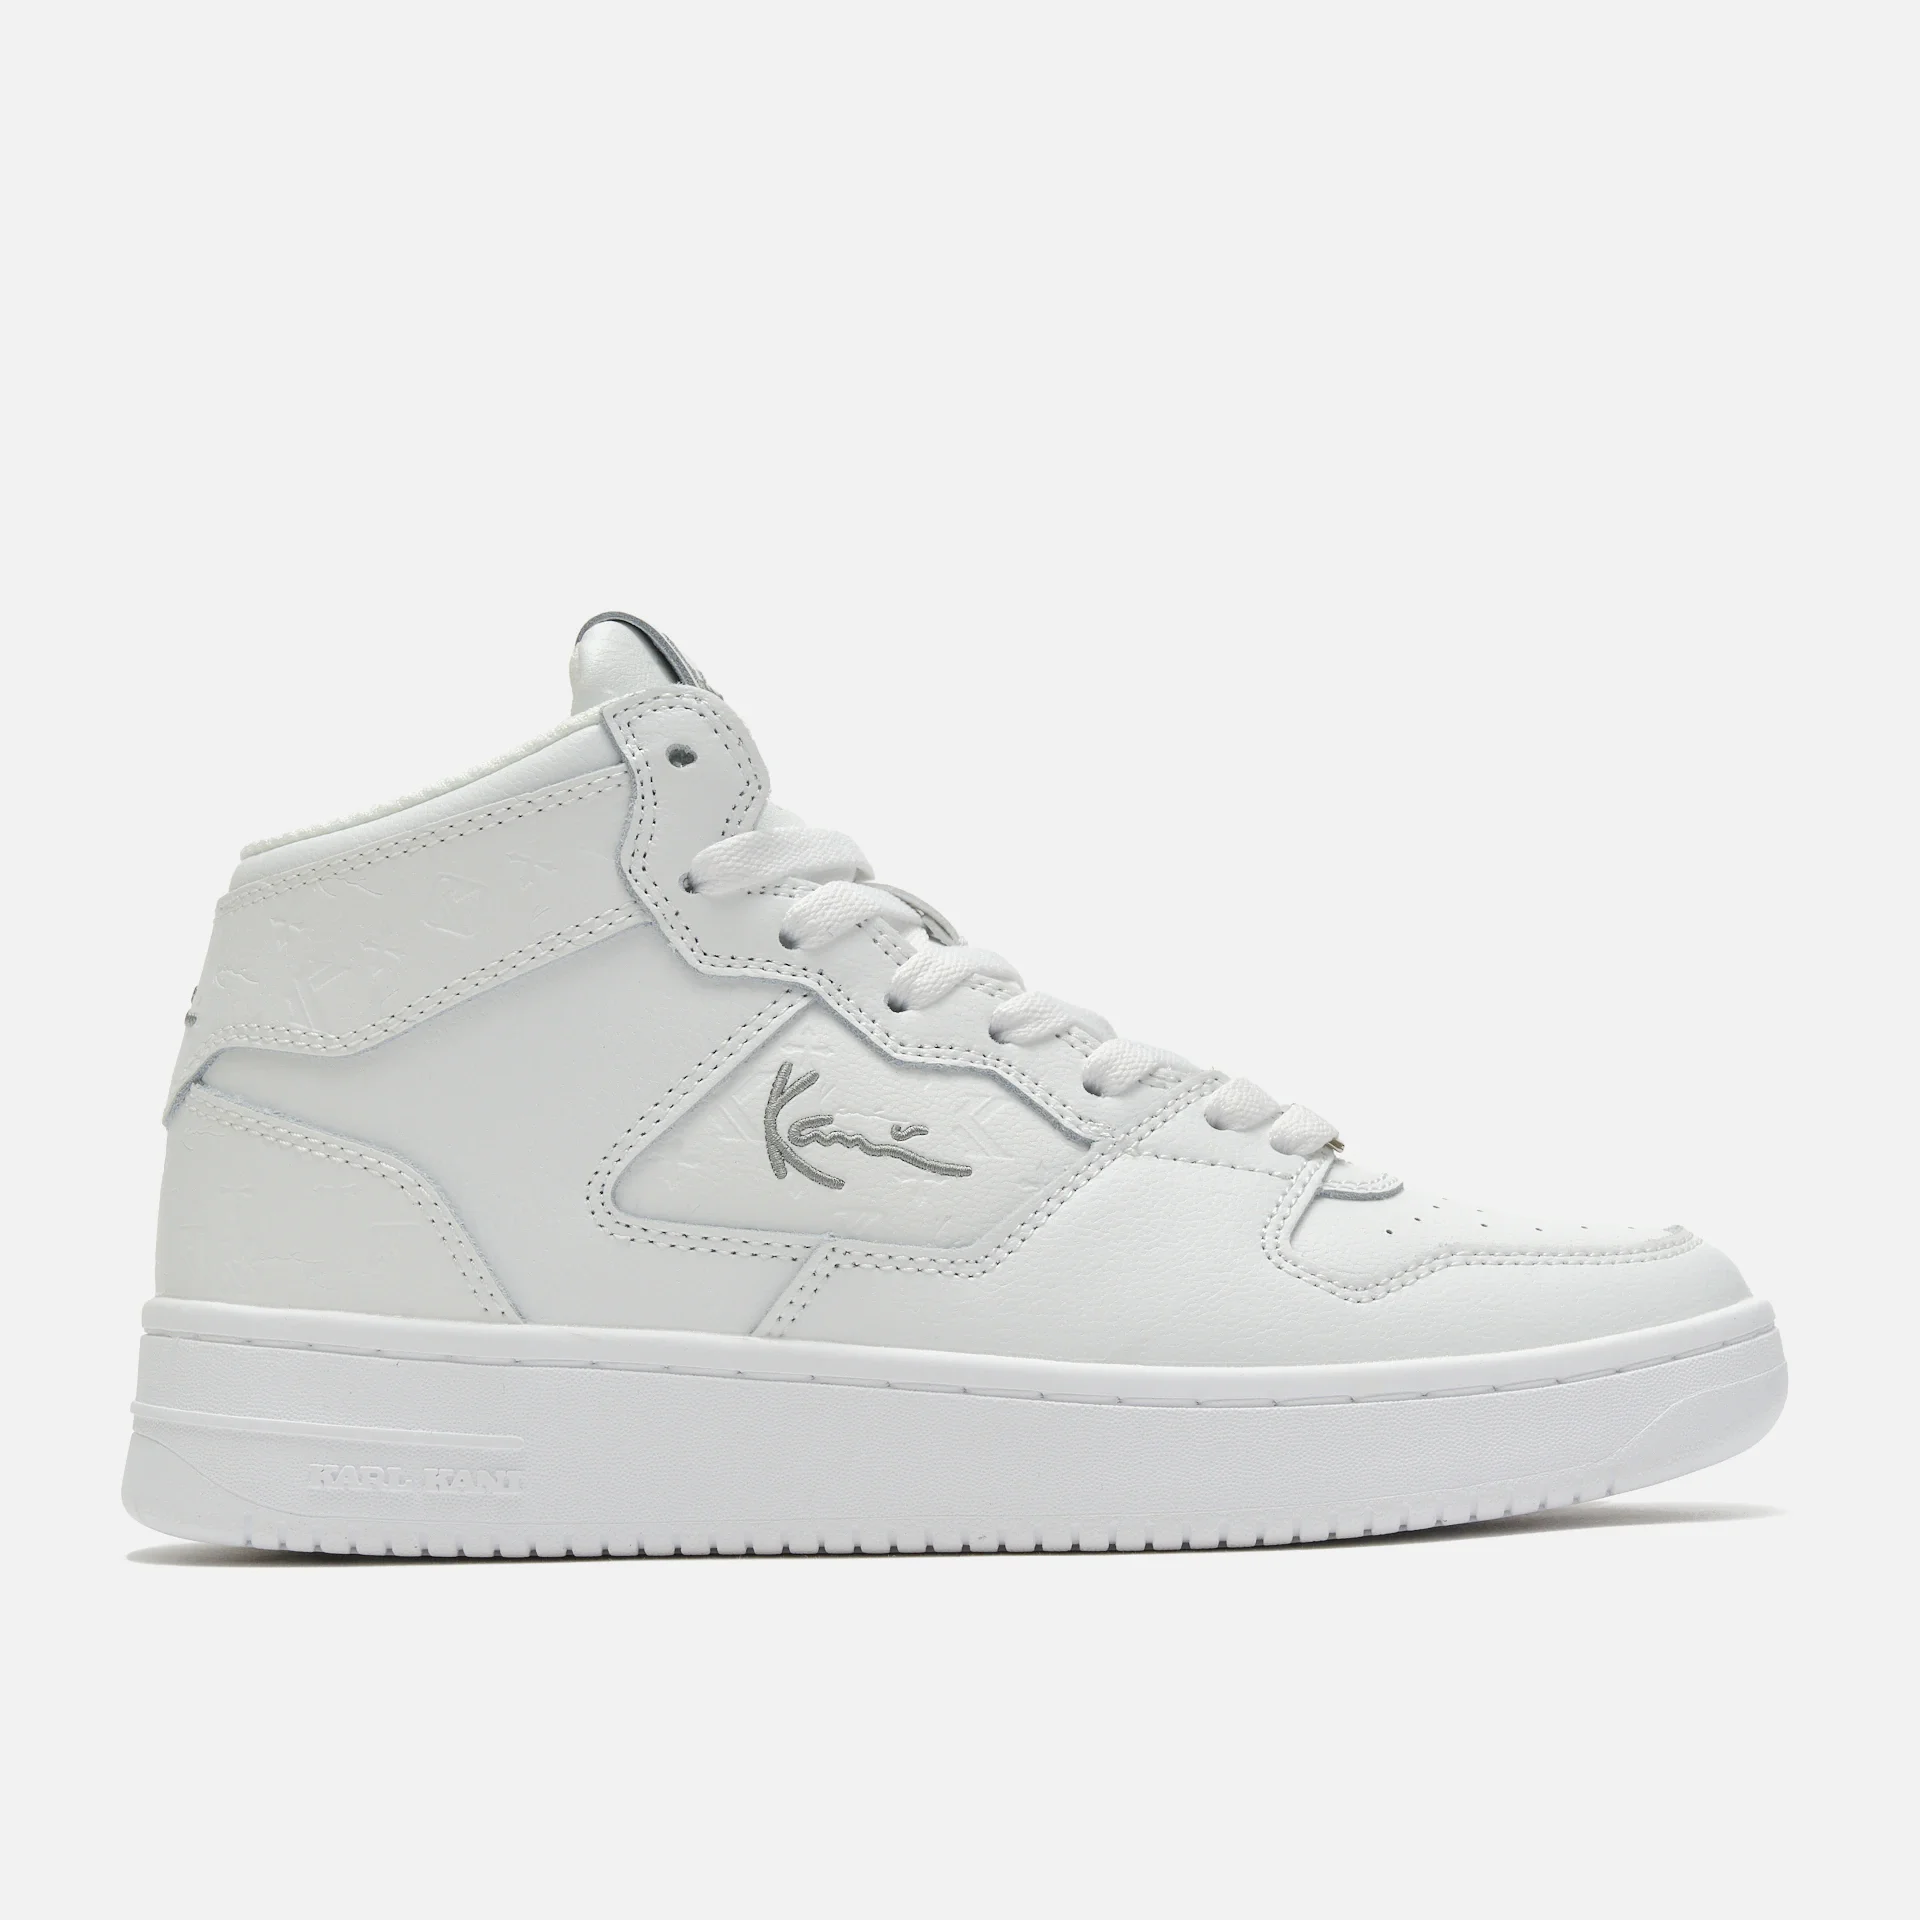 Karl Kani 89 High Premium Sneakers White